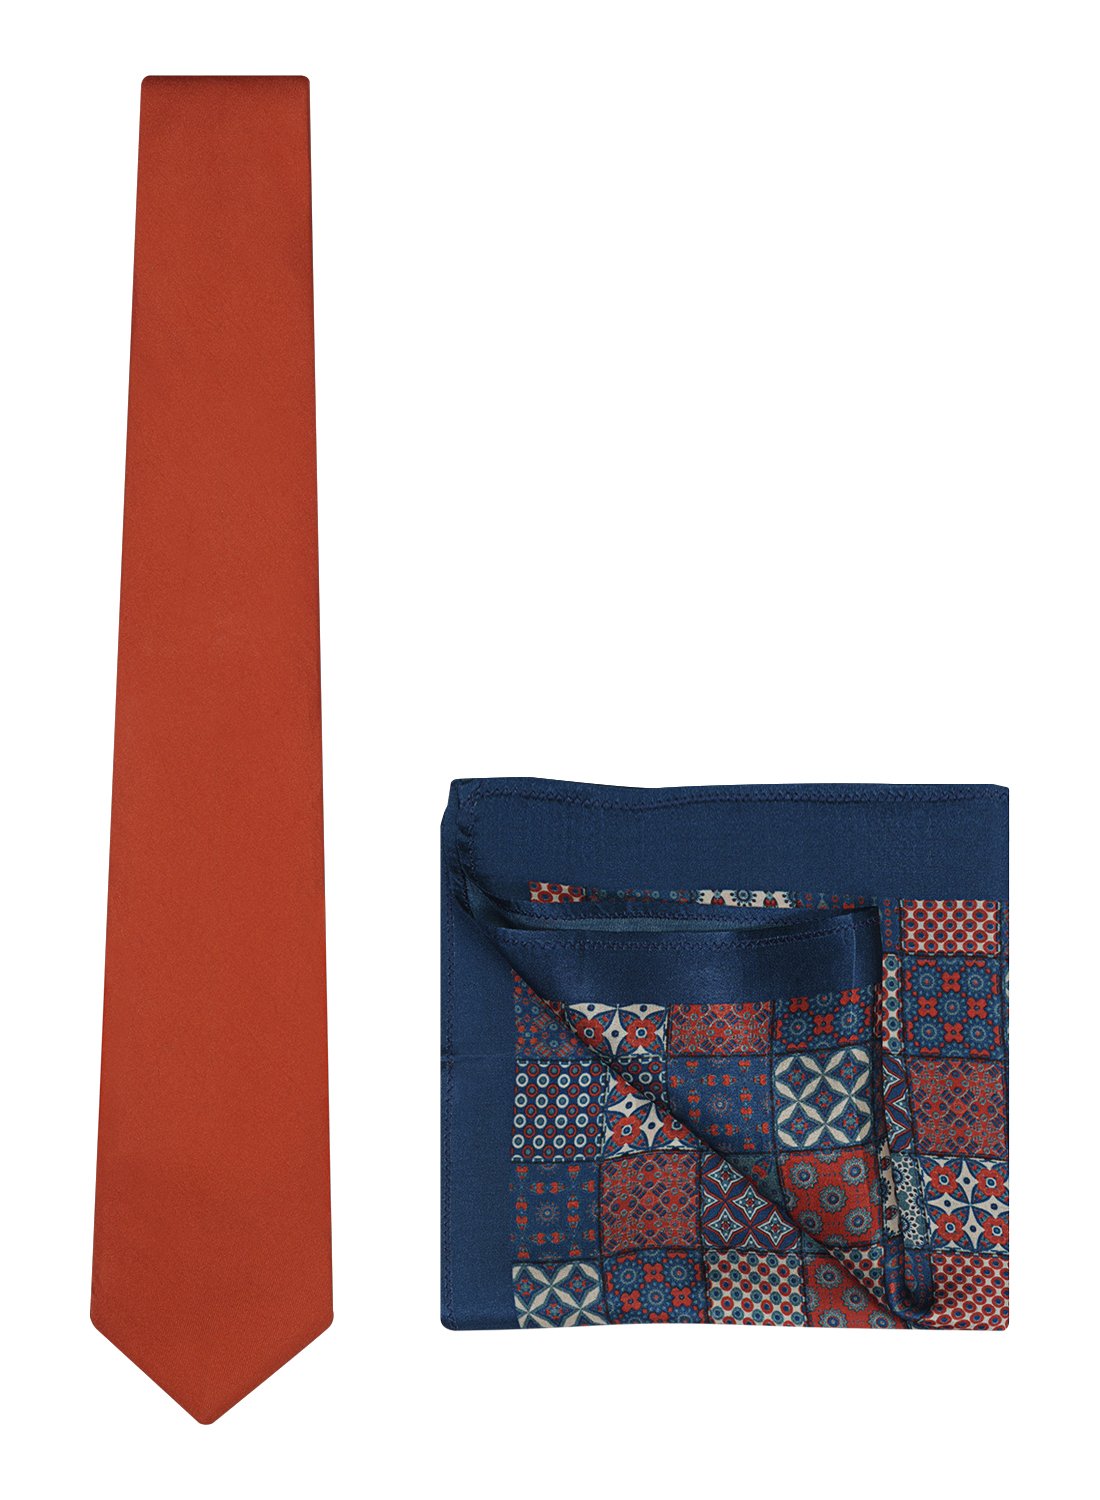 Chokore Red color Plain Silk Tie & Blue & Red pure silk pocket square set